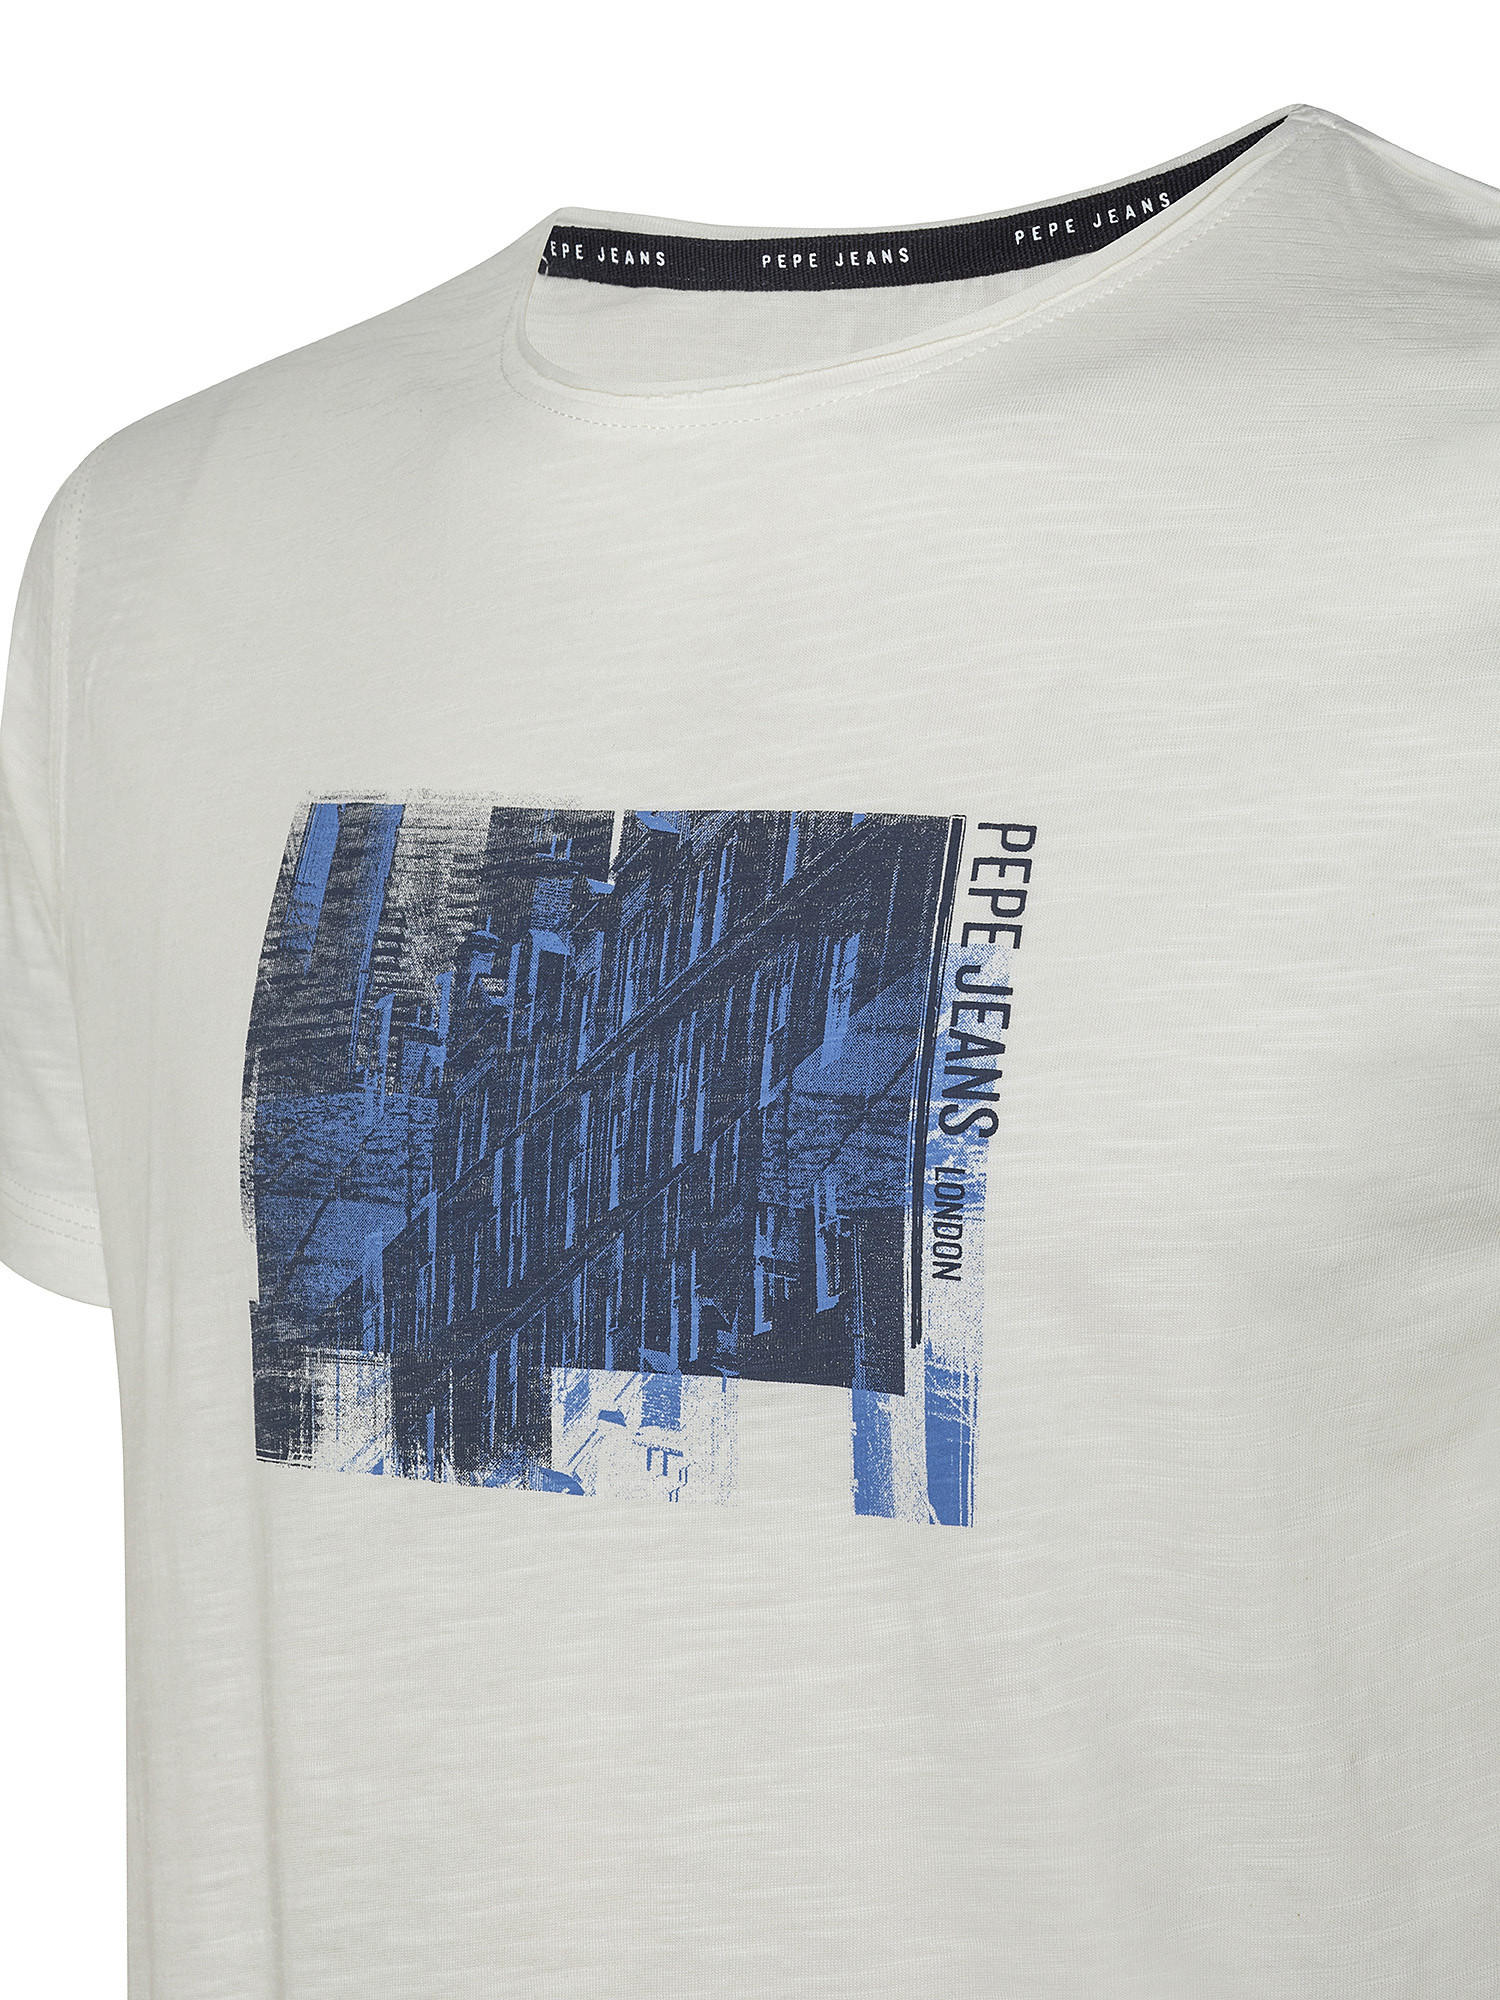 Sherlock cotton T-shirt, White, large image number 2